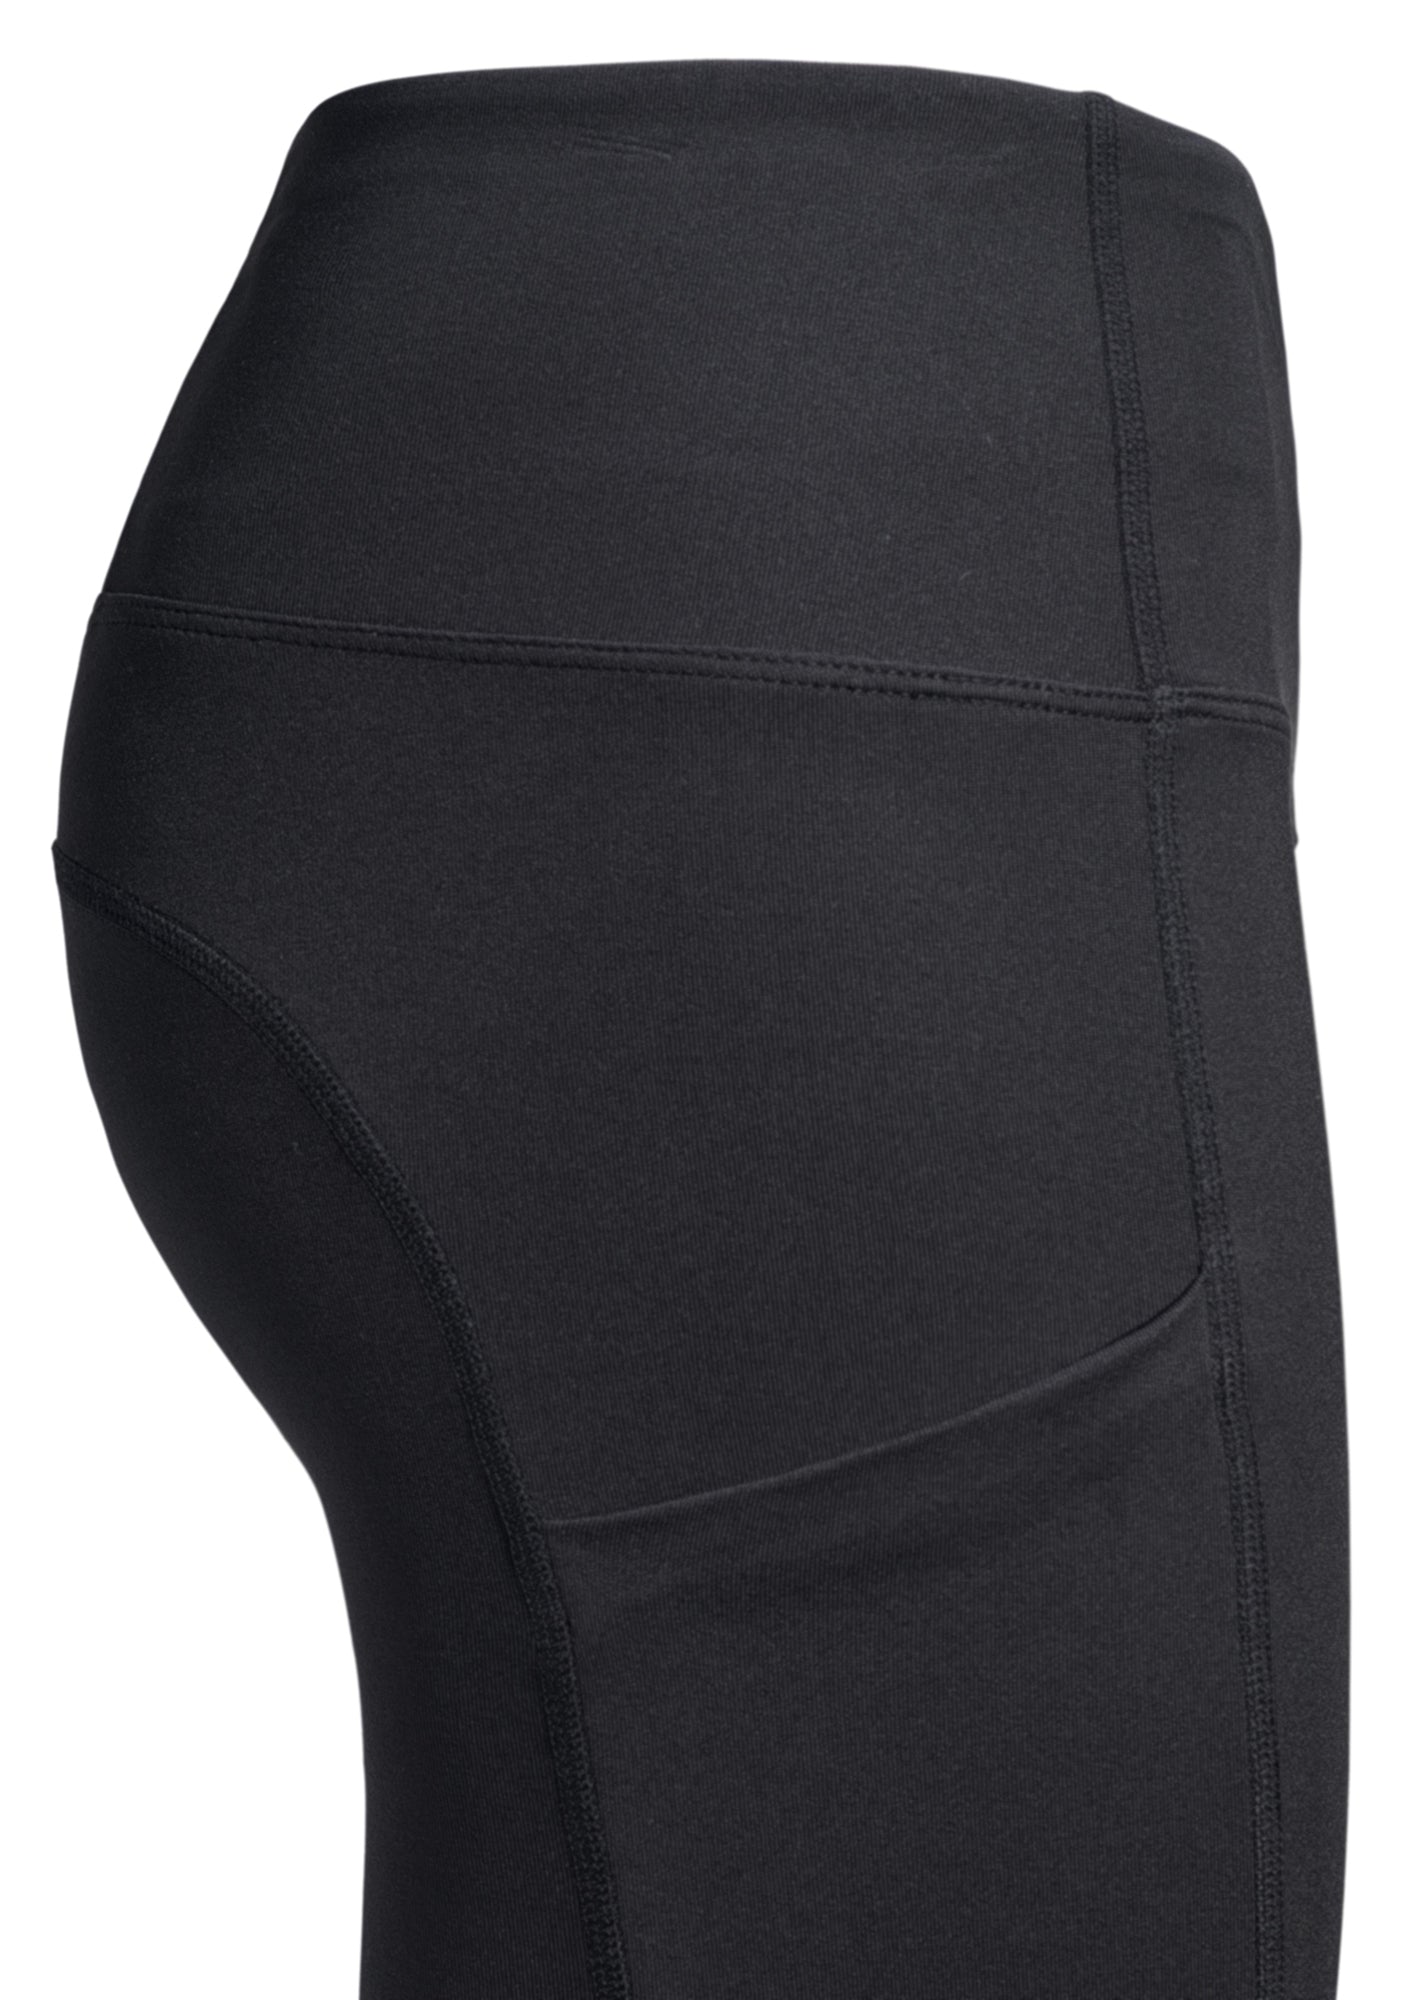 side pocket black legging woman christian activewear